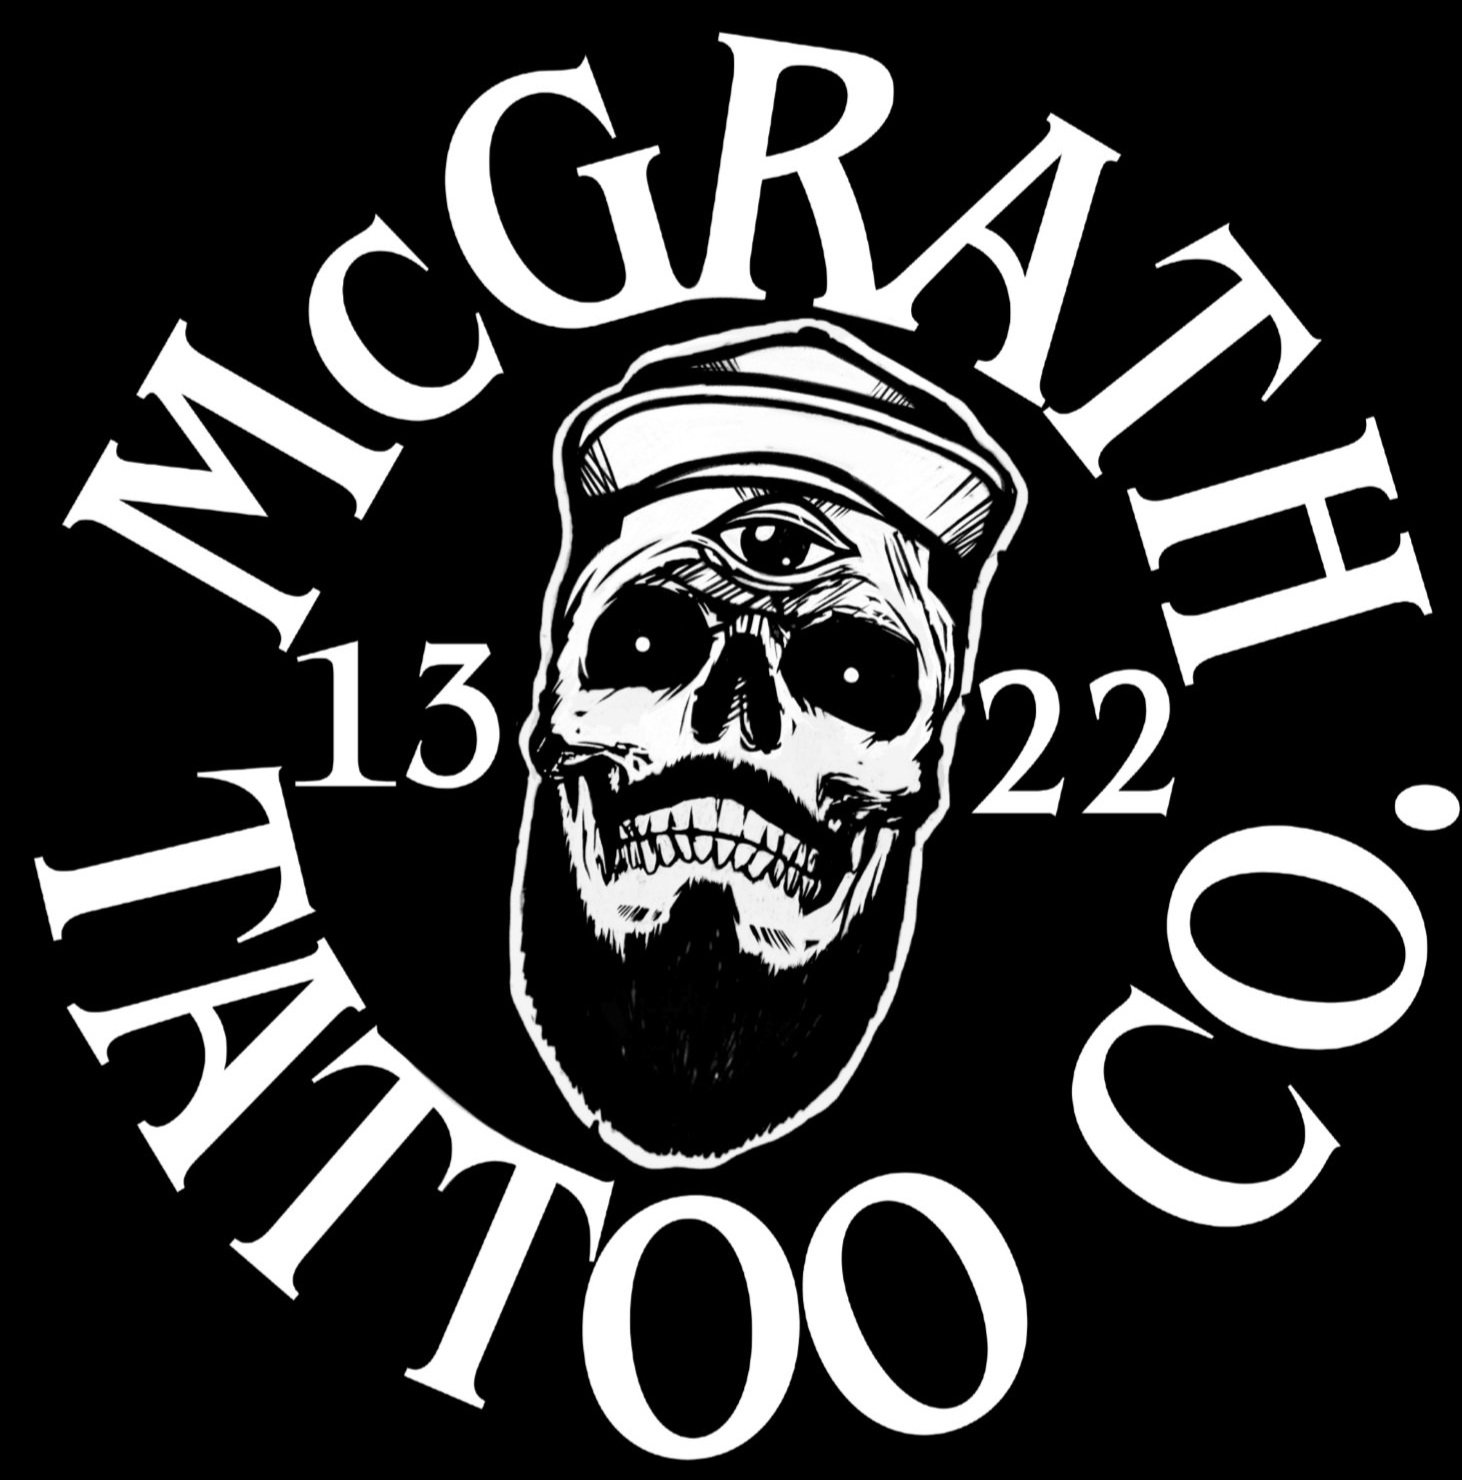 McGrath Tattoo Co. 